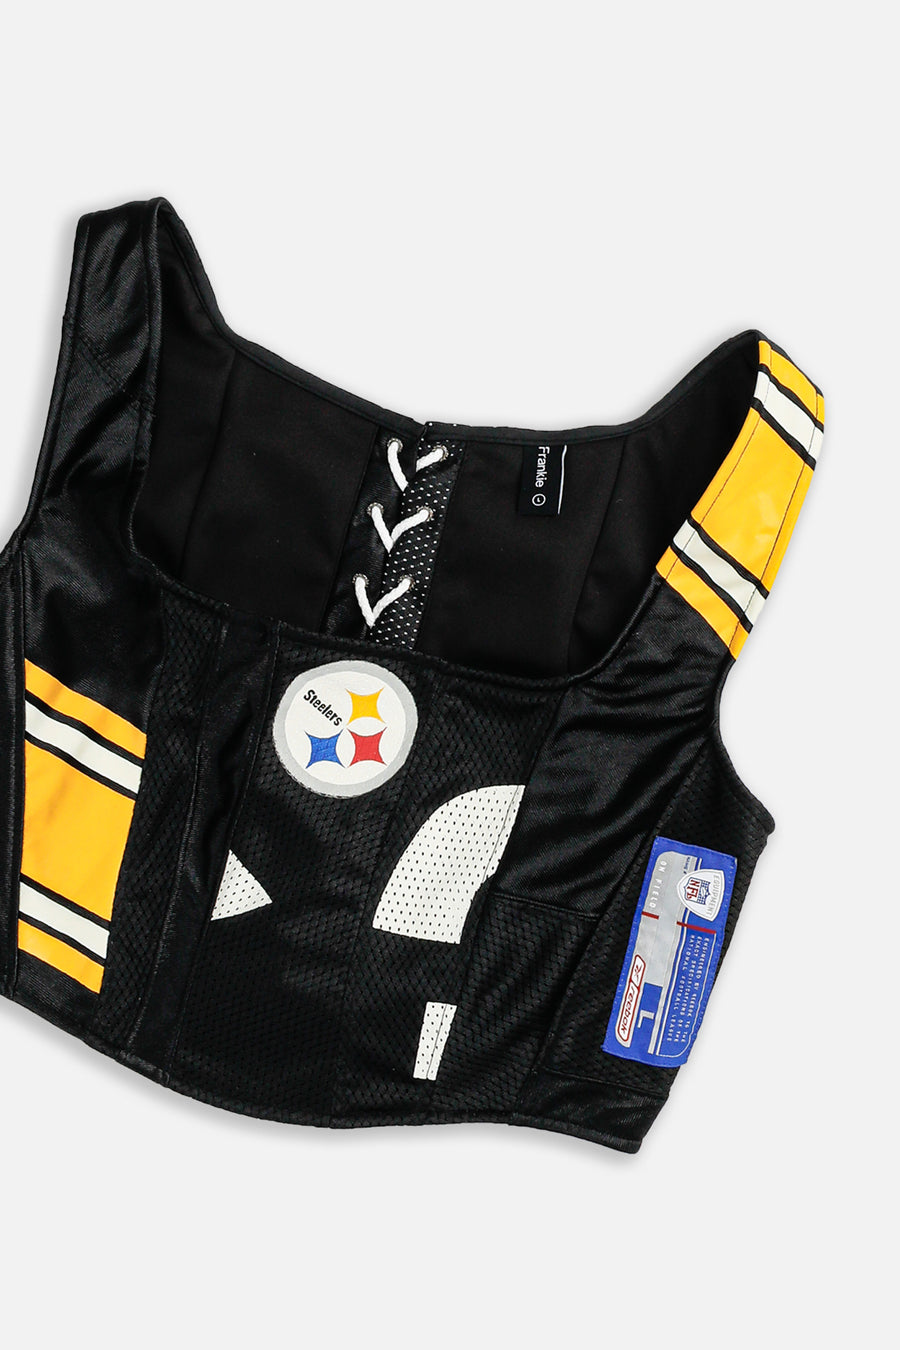 Rework Pittsburgh Steelers NFL Corset - L